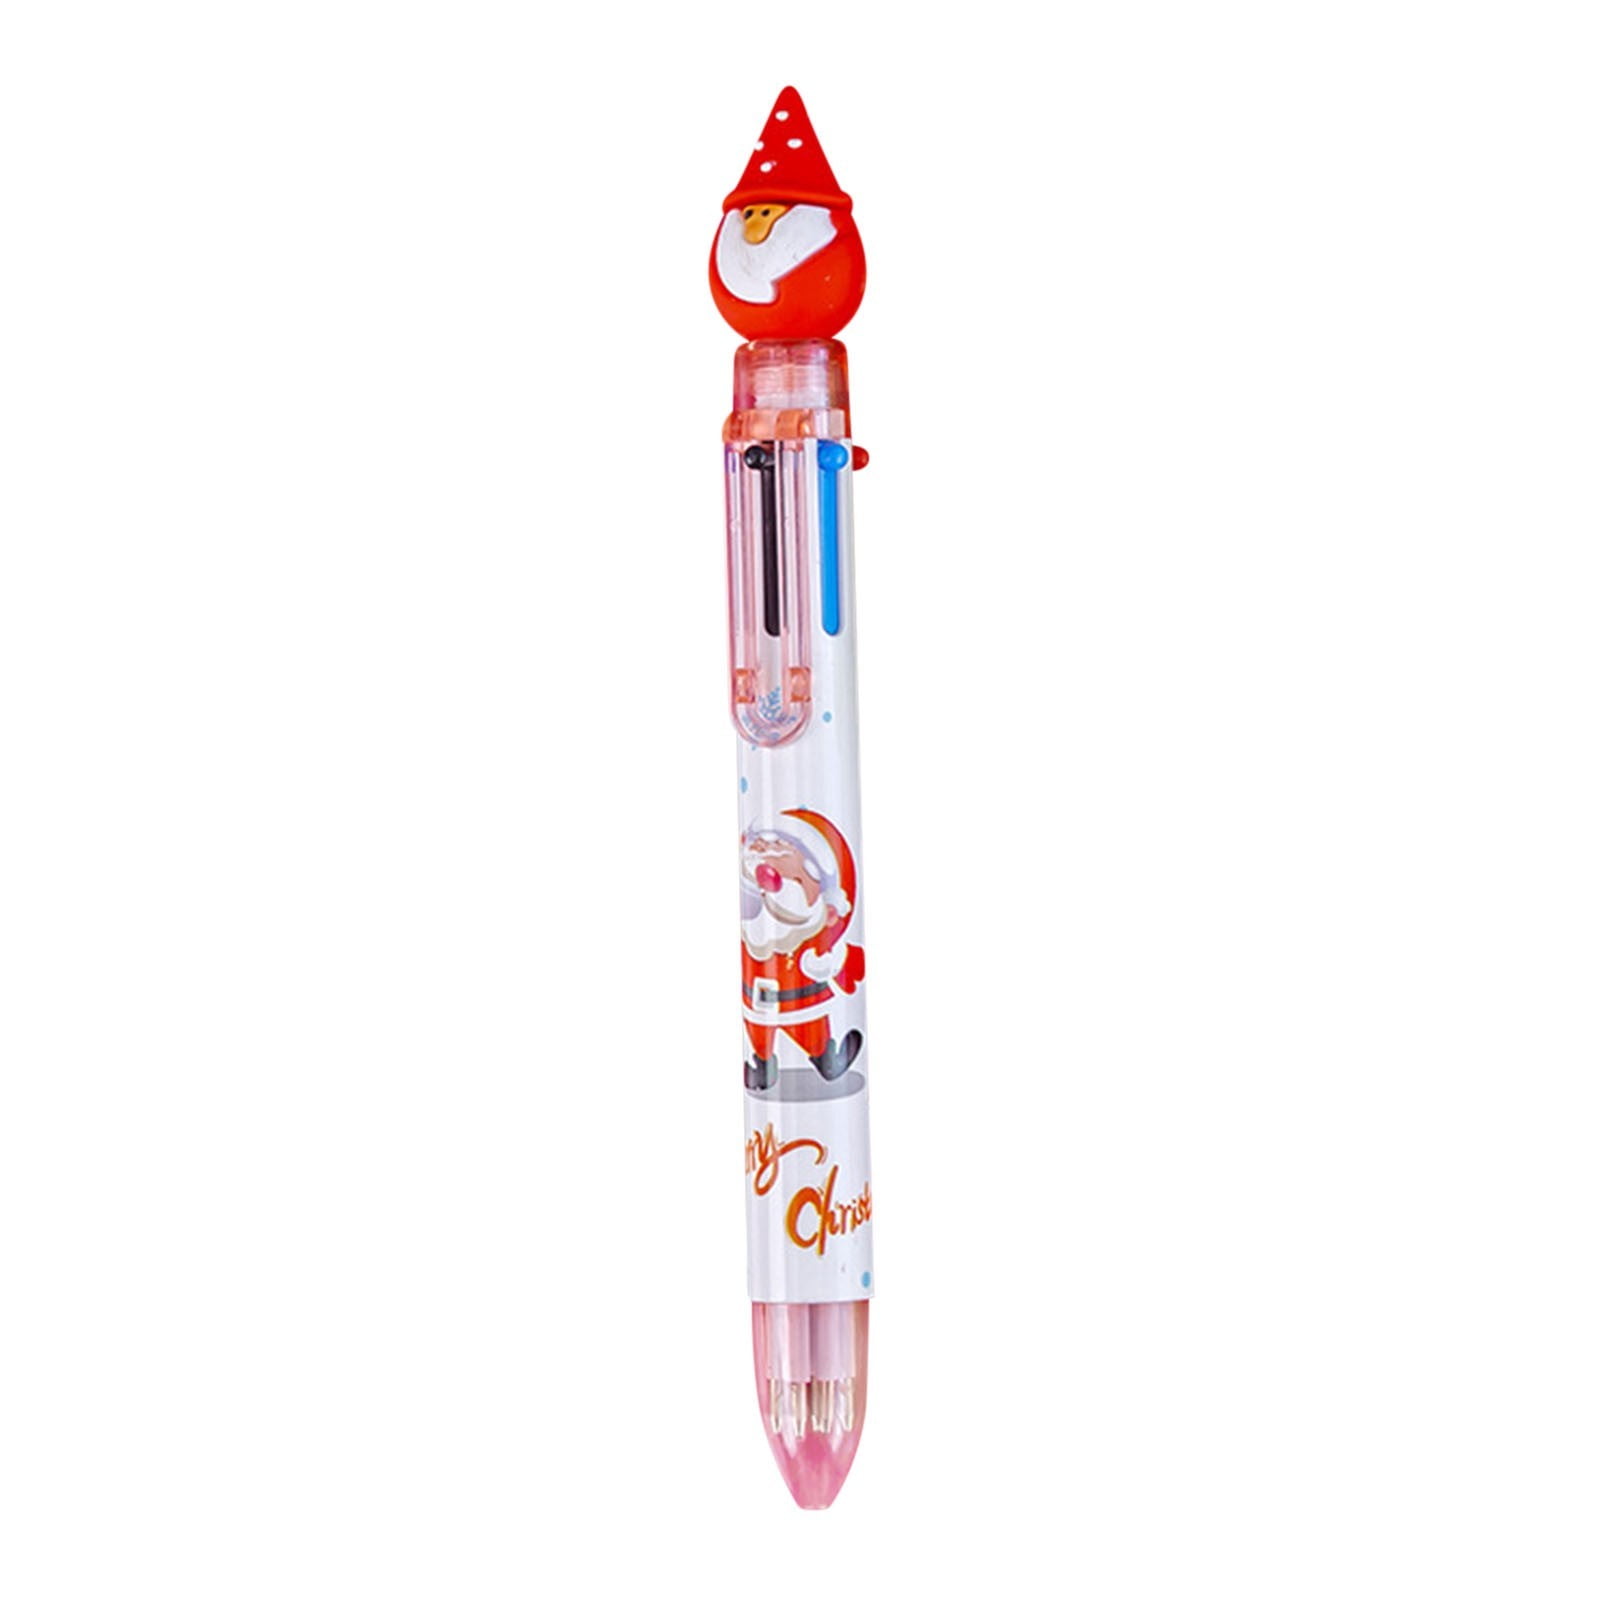 Egnmcr 24 Pcs Glitter and Gel Pen Refills, 0.8mm Colorful Gel Pen Set Glitter and Coloring Pens Art Marker for ing Drawing - Back to School Savings